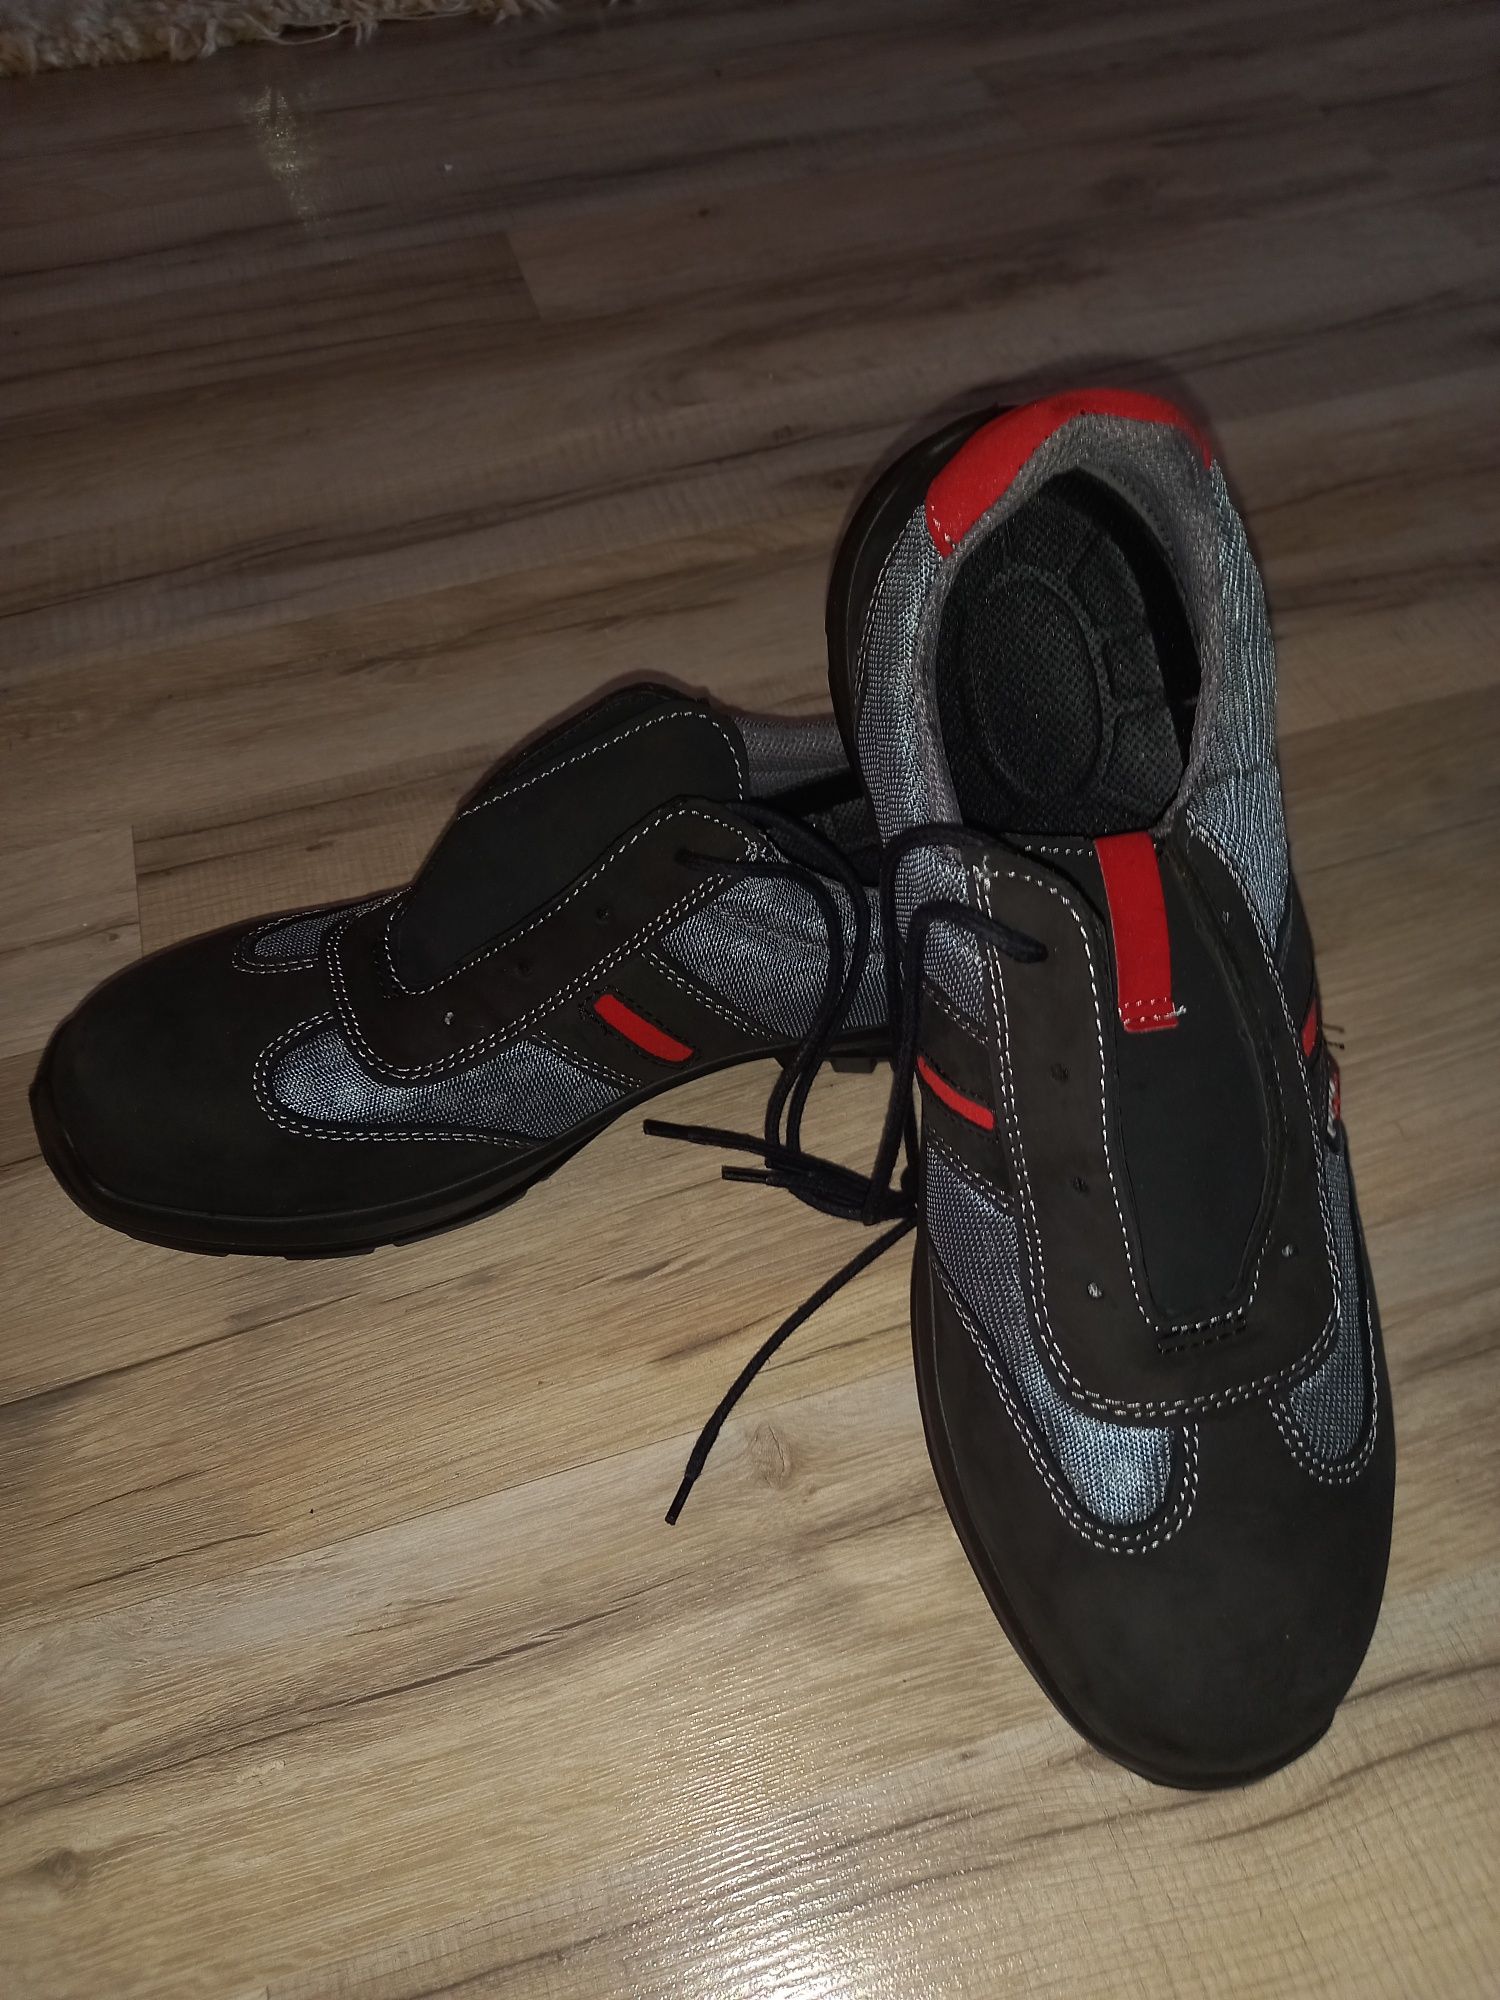 PPO 503 S1 SRC ochronne buty robocze kompozytowy podnosek